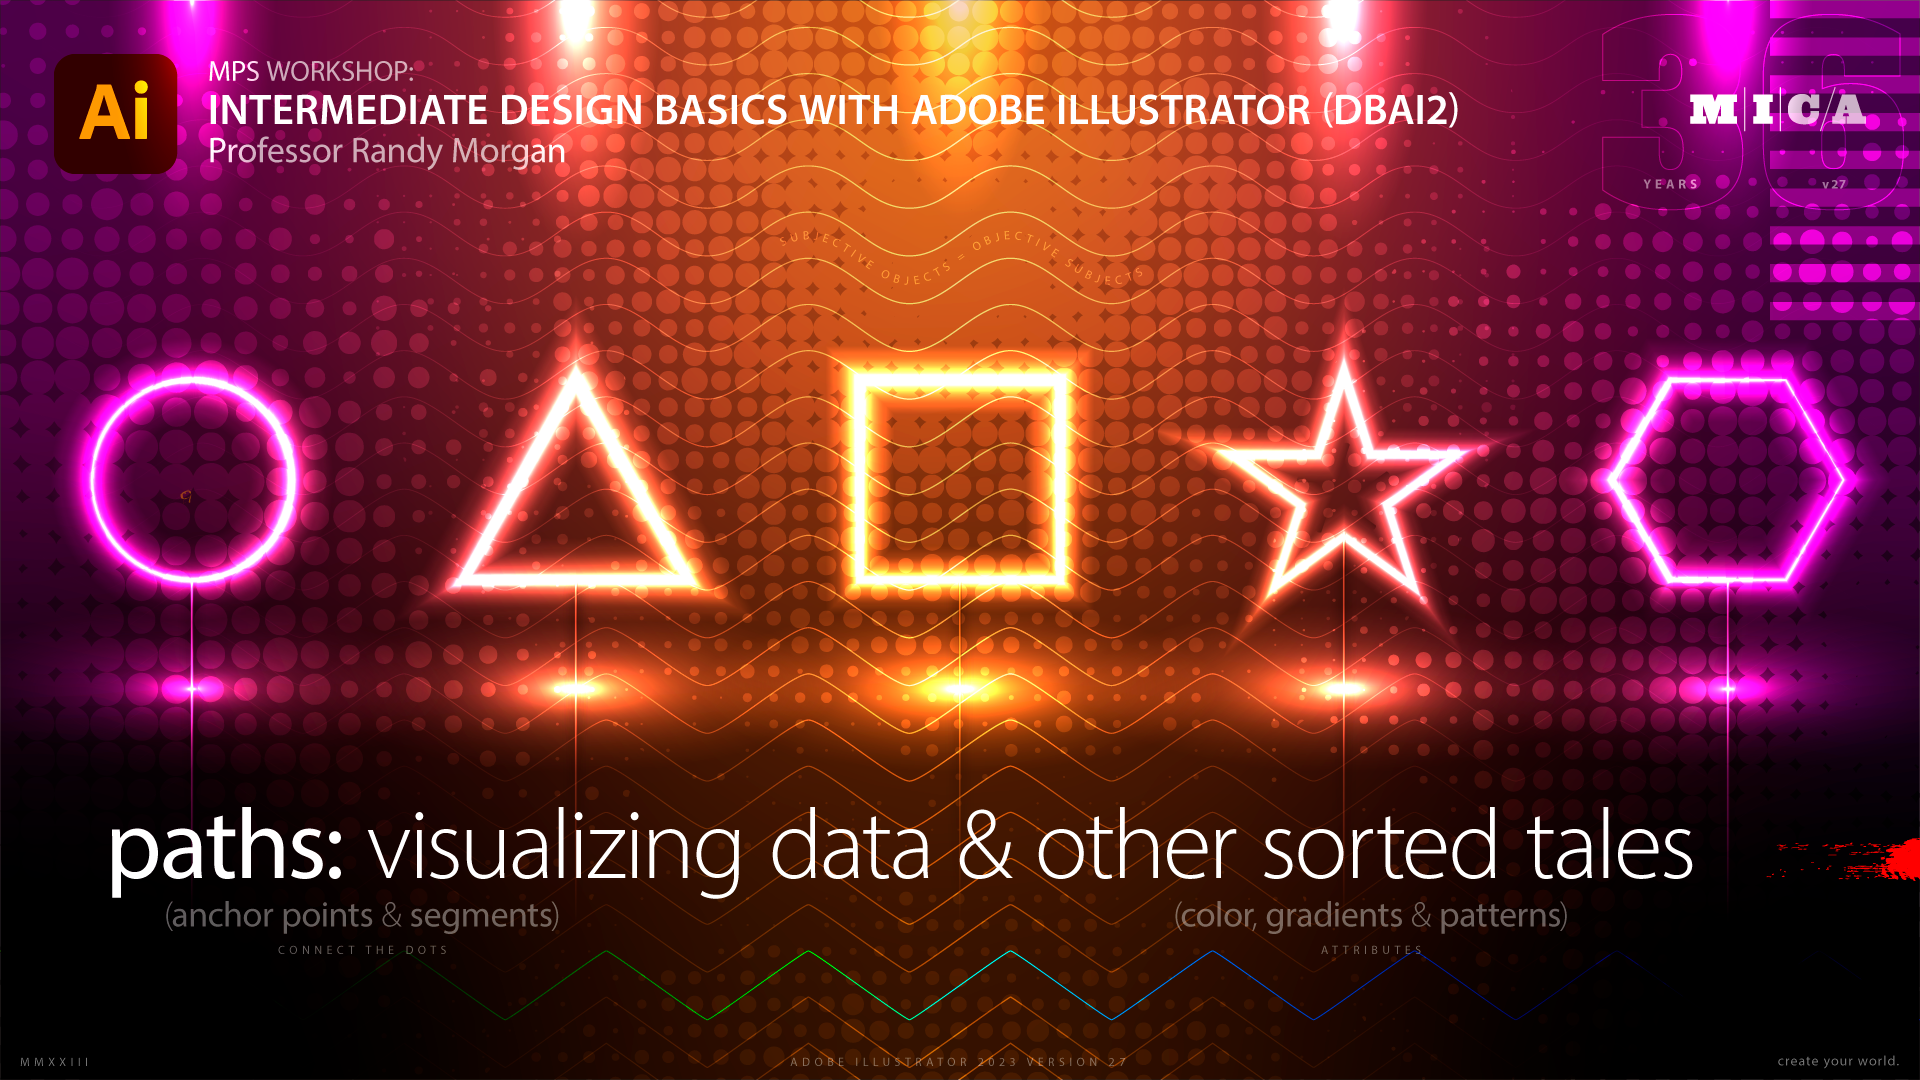 MICA MPS Workshop: Intermediate Design Basics with Adobe Illustrator (DBAI2), Summer 2023 hero image.